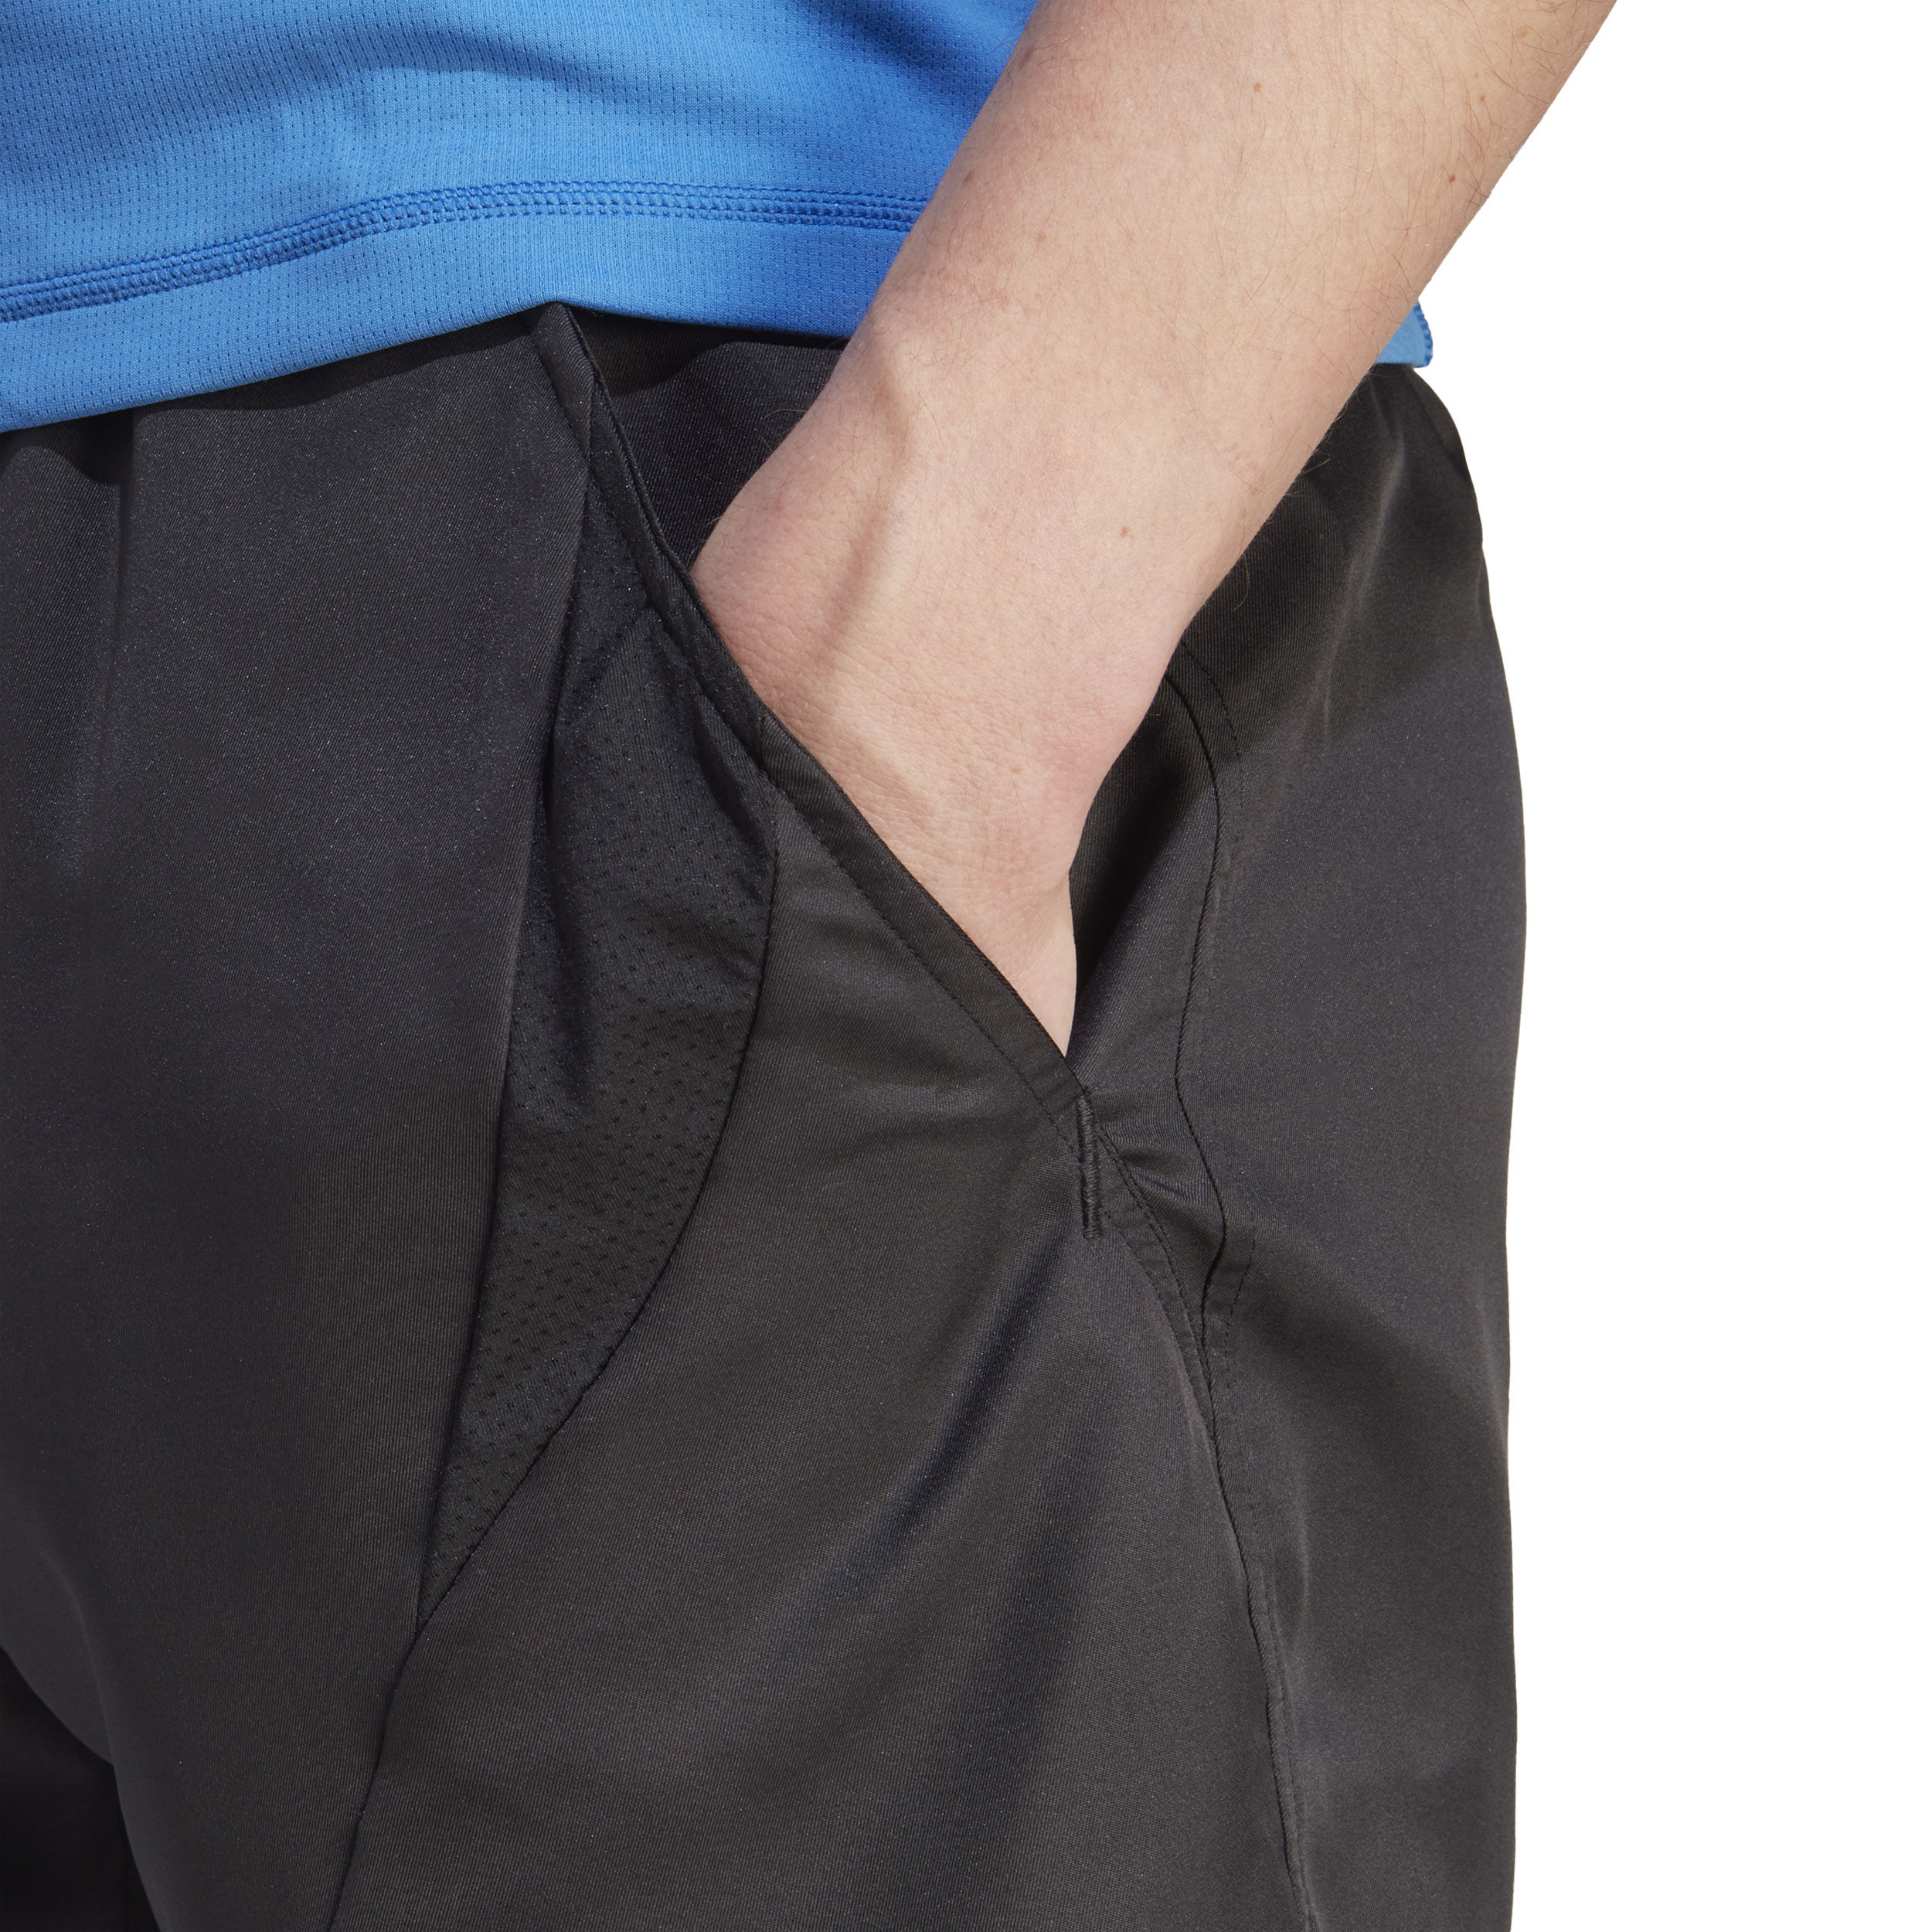 Trousers Universal Men Adidas Base Short Woven S21939 Black | eBay